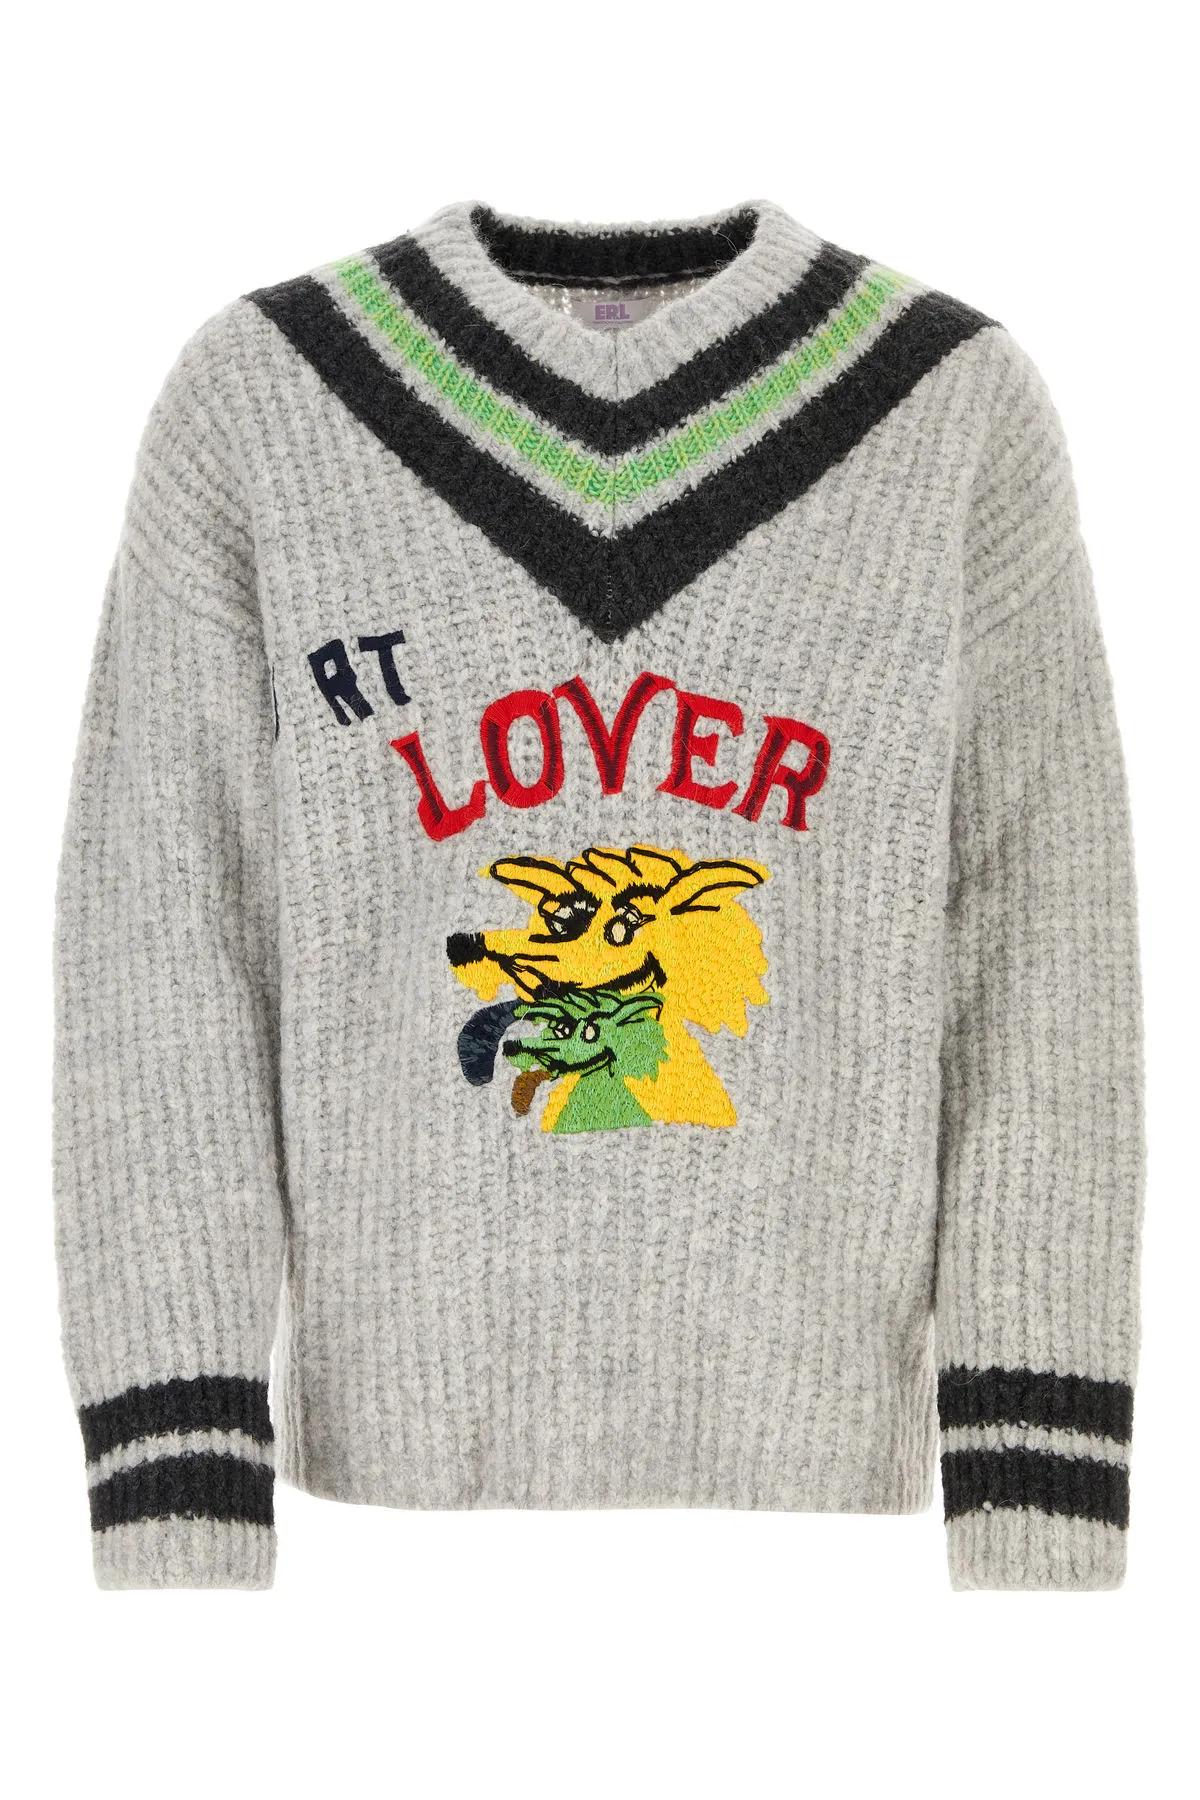 Shop Erl Light Grey Knit Sweater